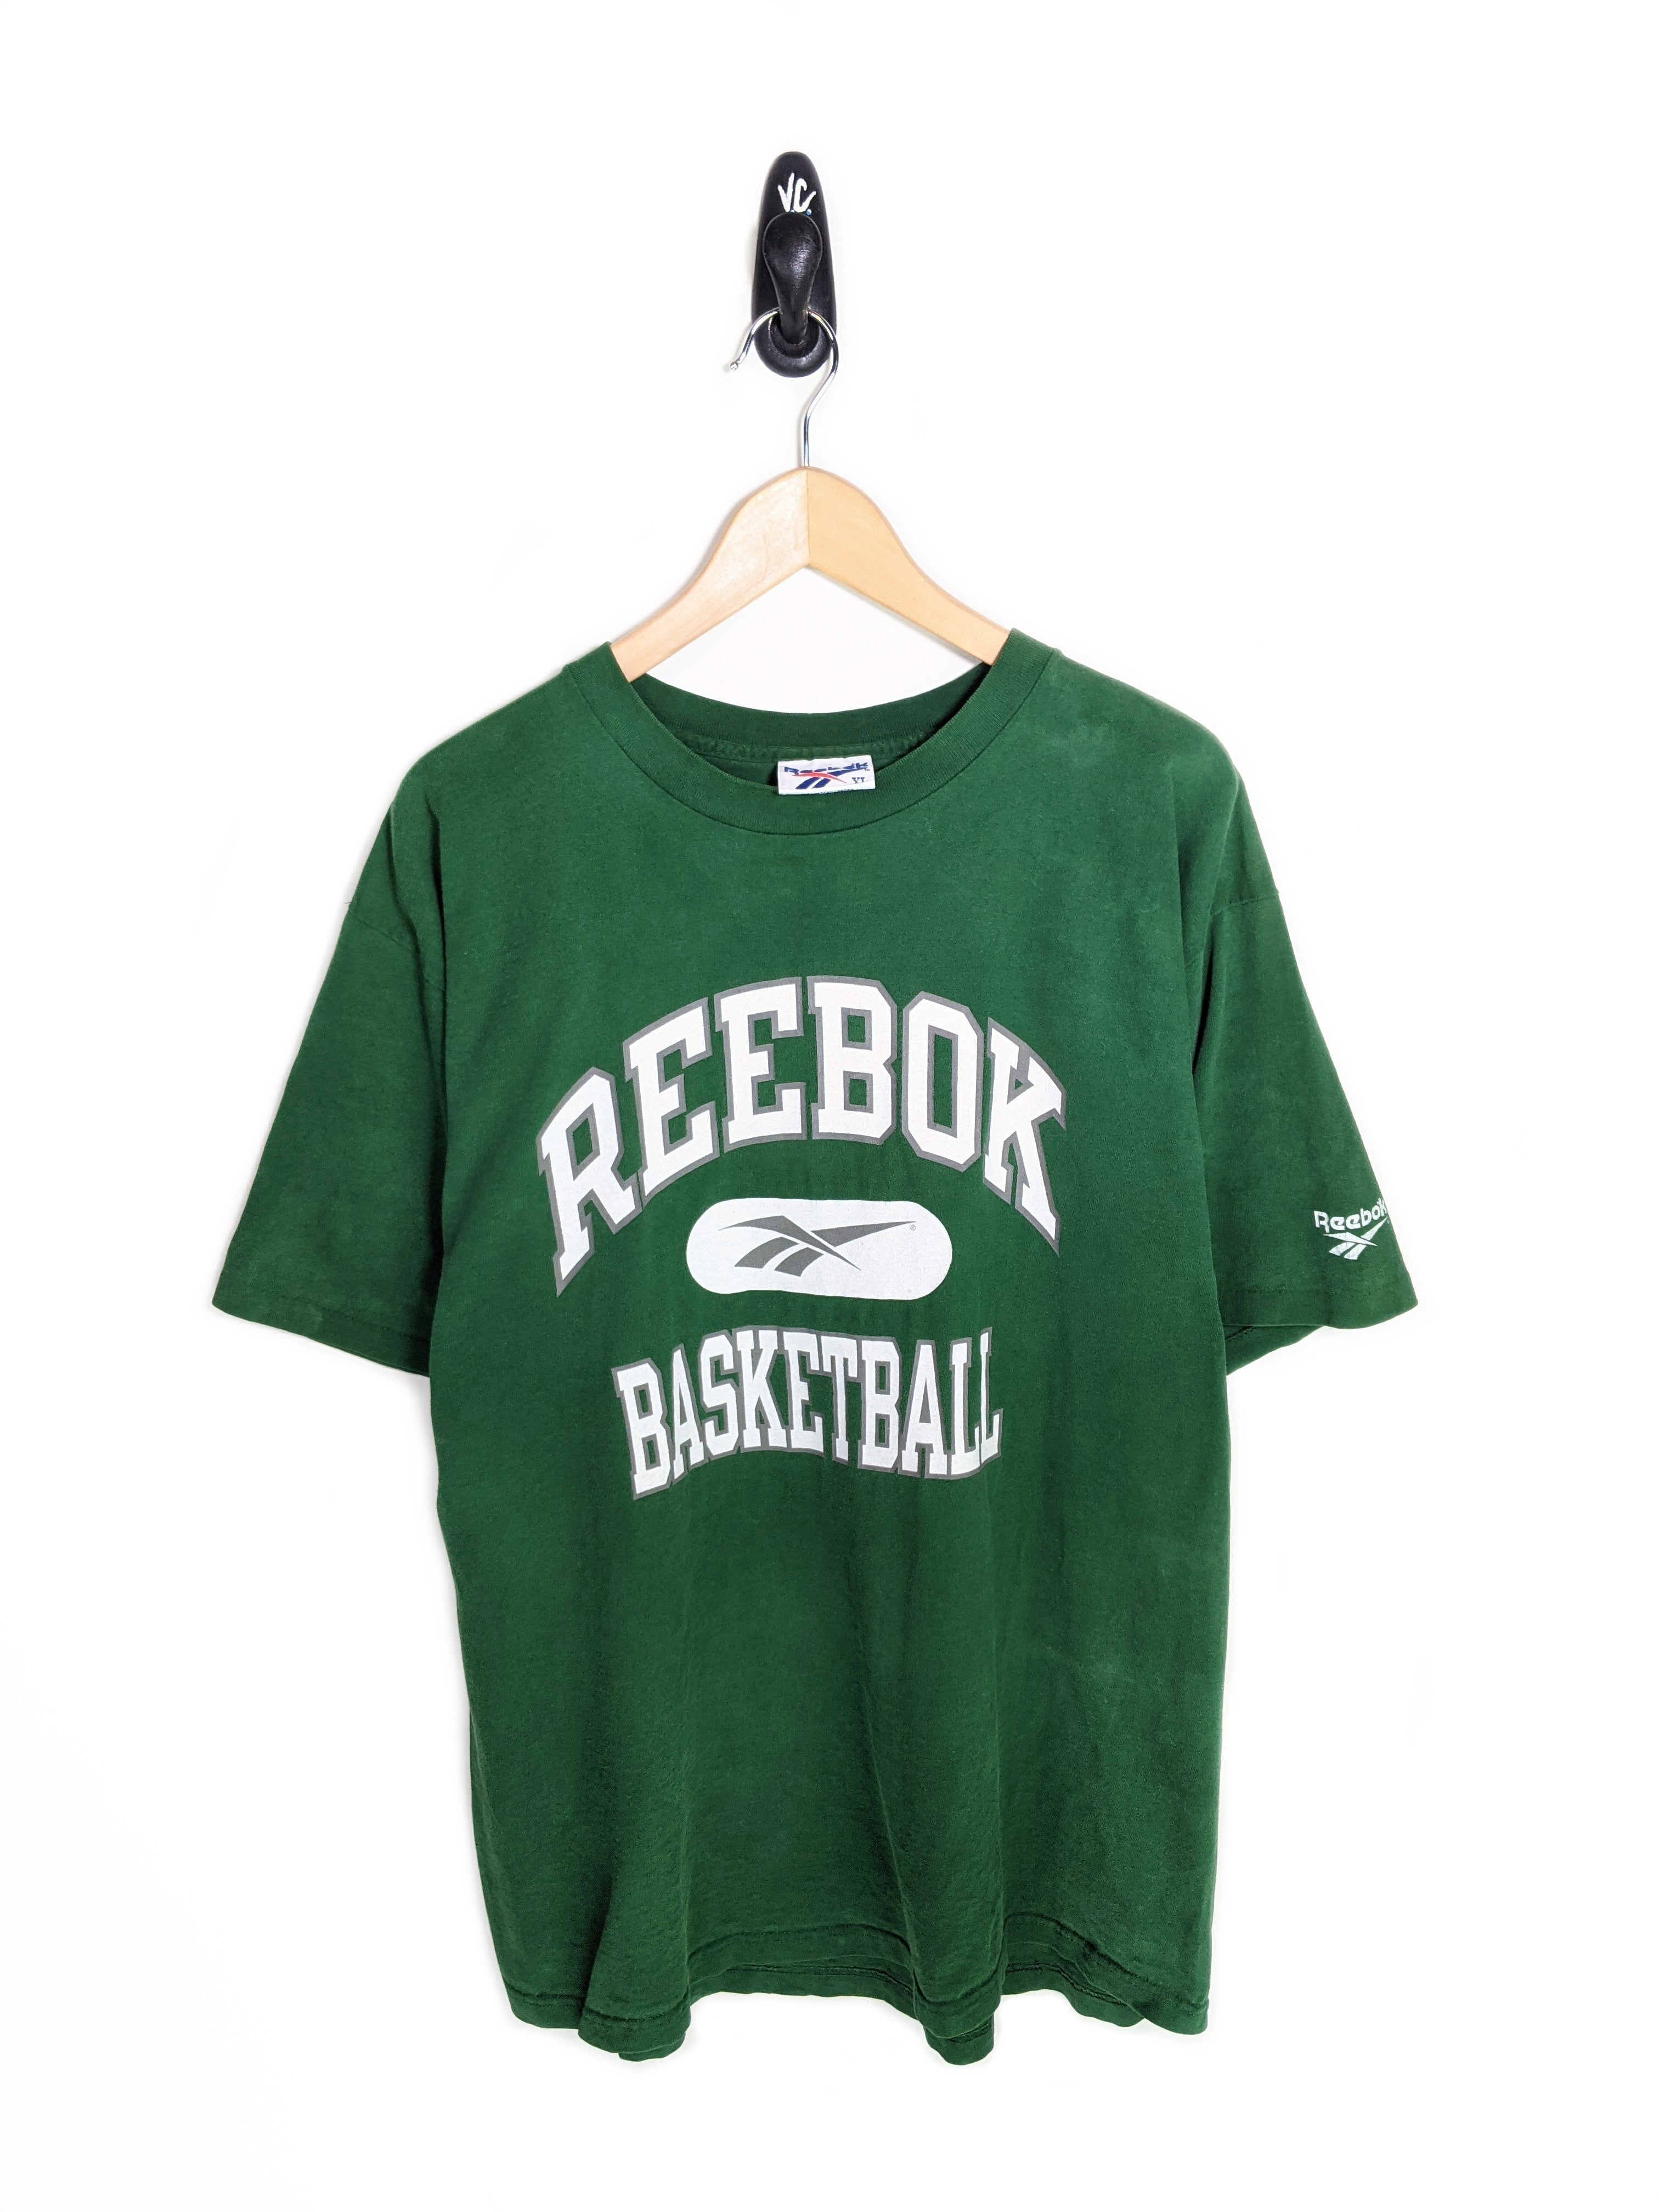 90's Reebok Basketball Tee (XL)